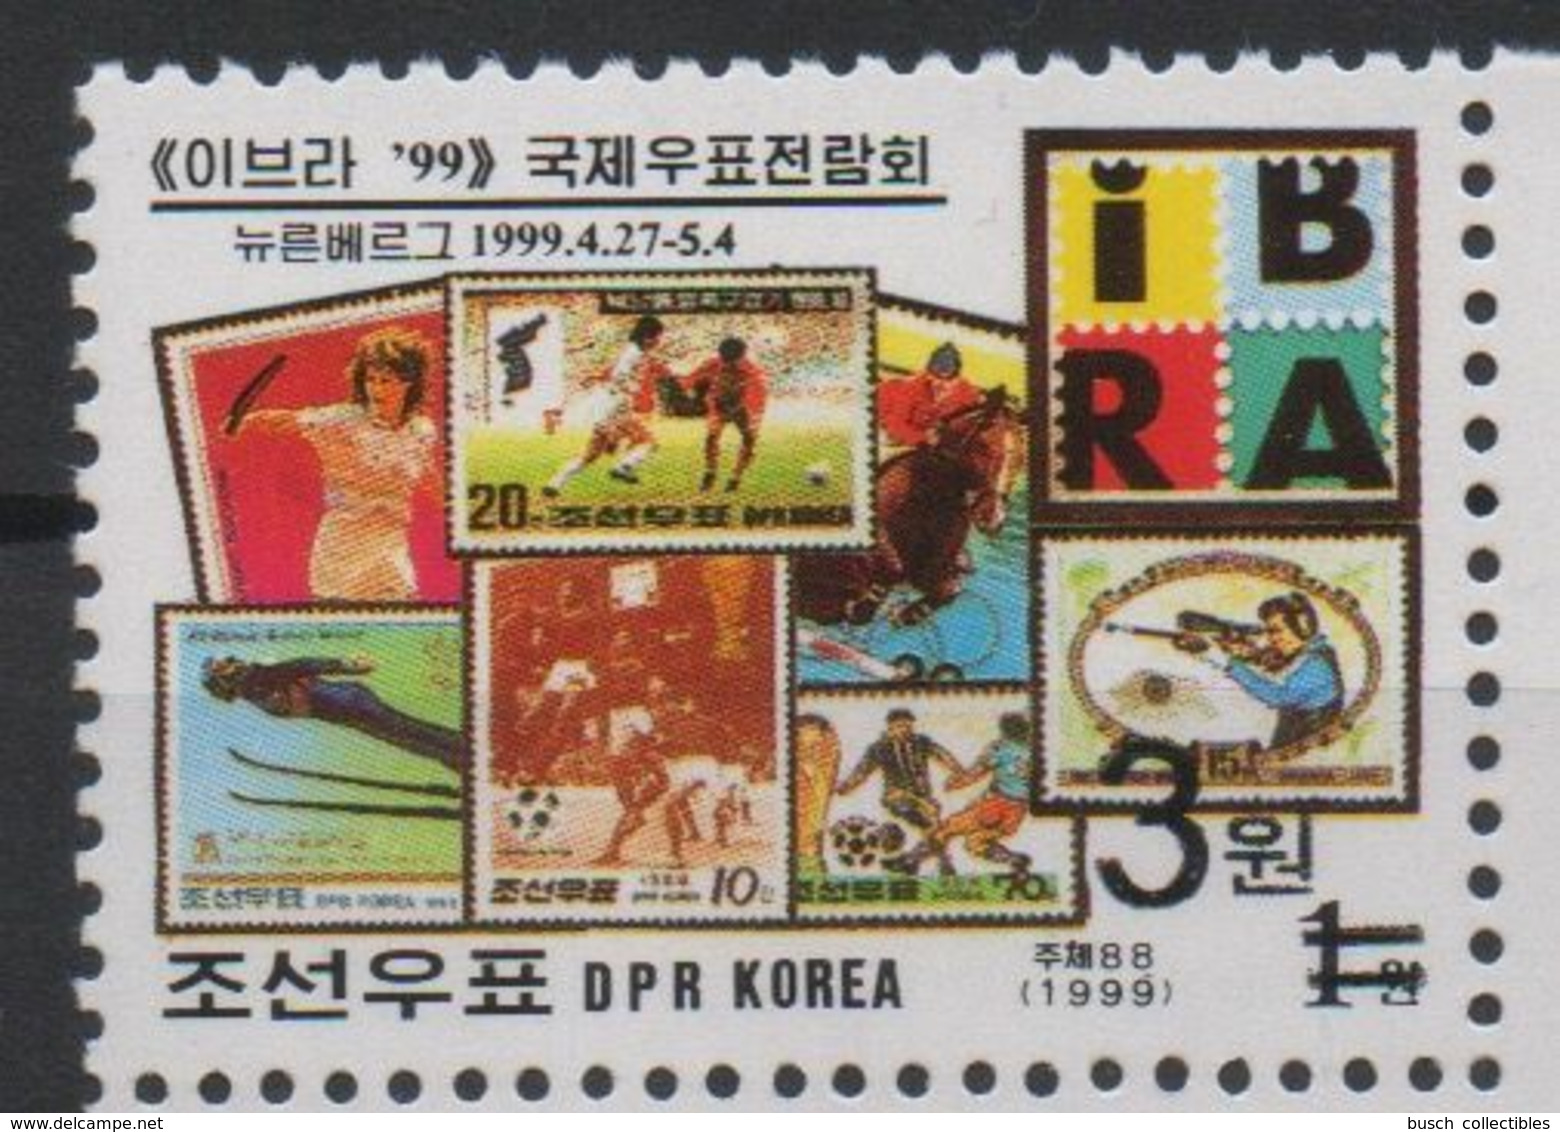 North Korea Corée Du Nord 2006 Mi. 5068 Surchargé OVERPRINT IBRA Nürnberg 1999 Stamp On Stamp Timbre Sur Timbre - Stamps On Stamps